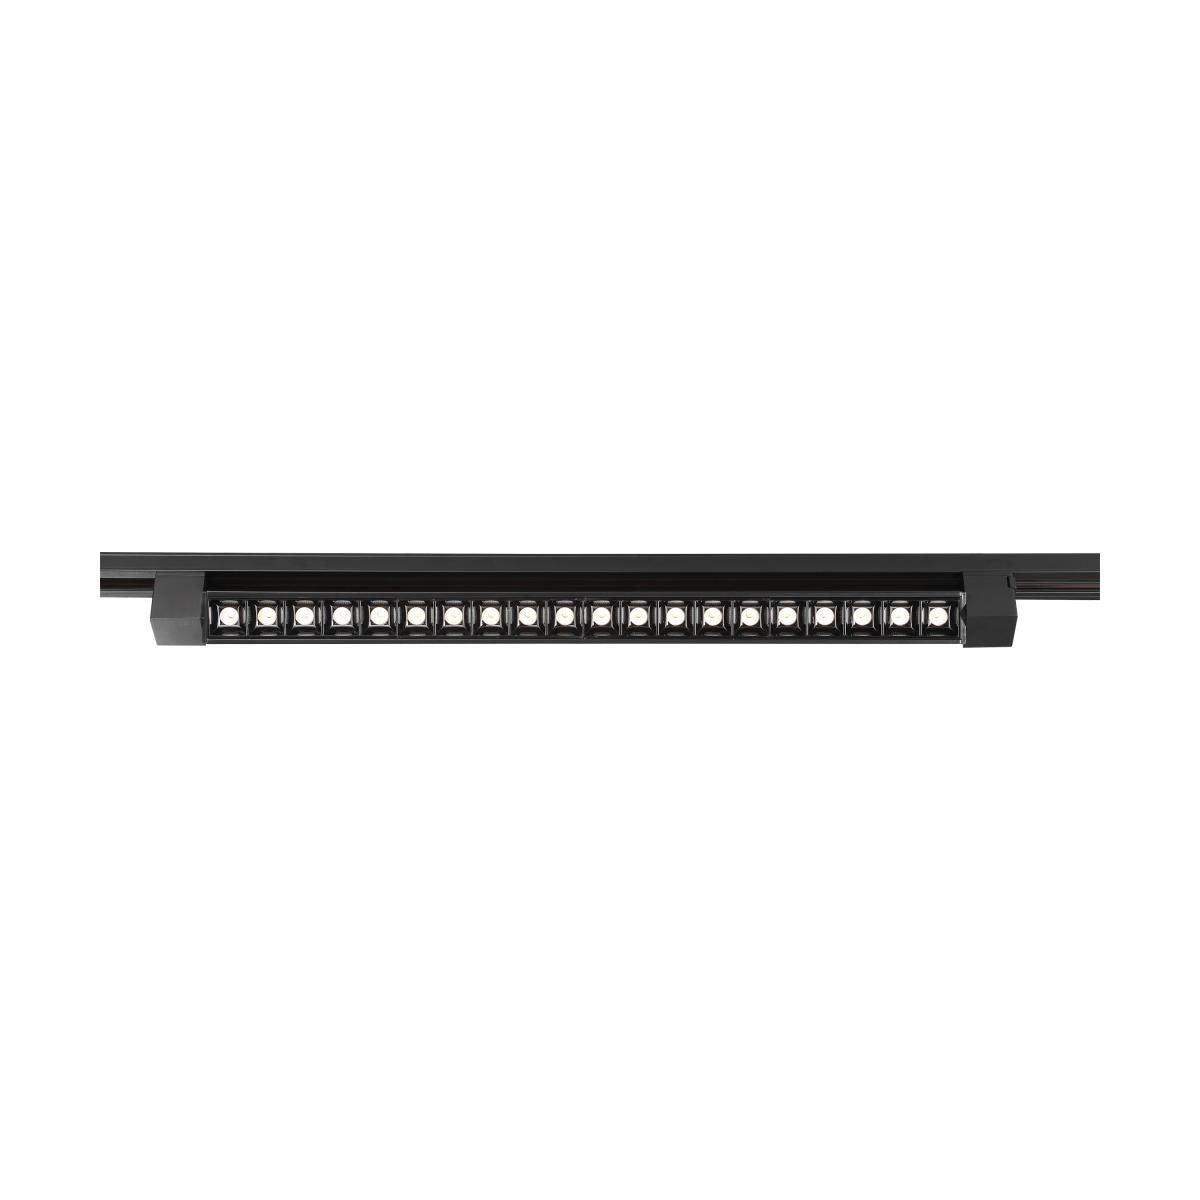 LED Linear Track Bar, 3000K, Halo (H), 30 Degree Beam Angle